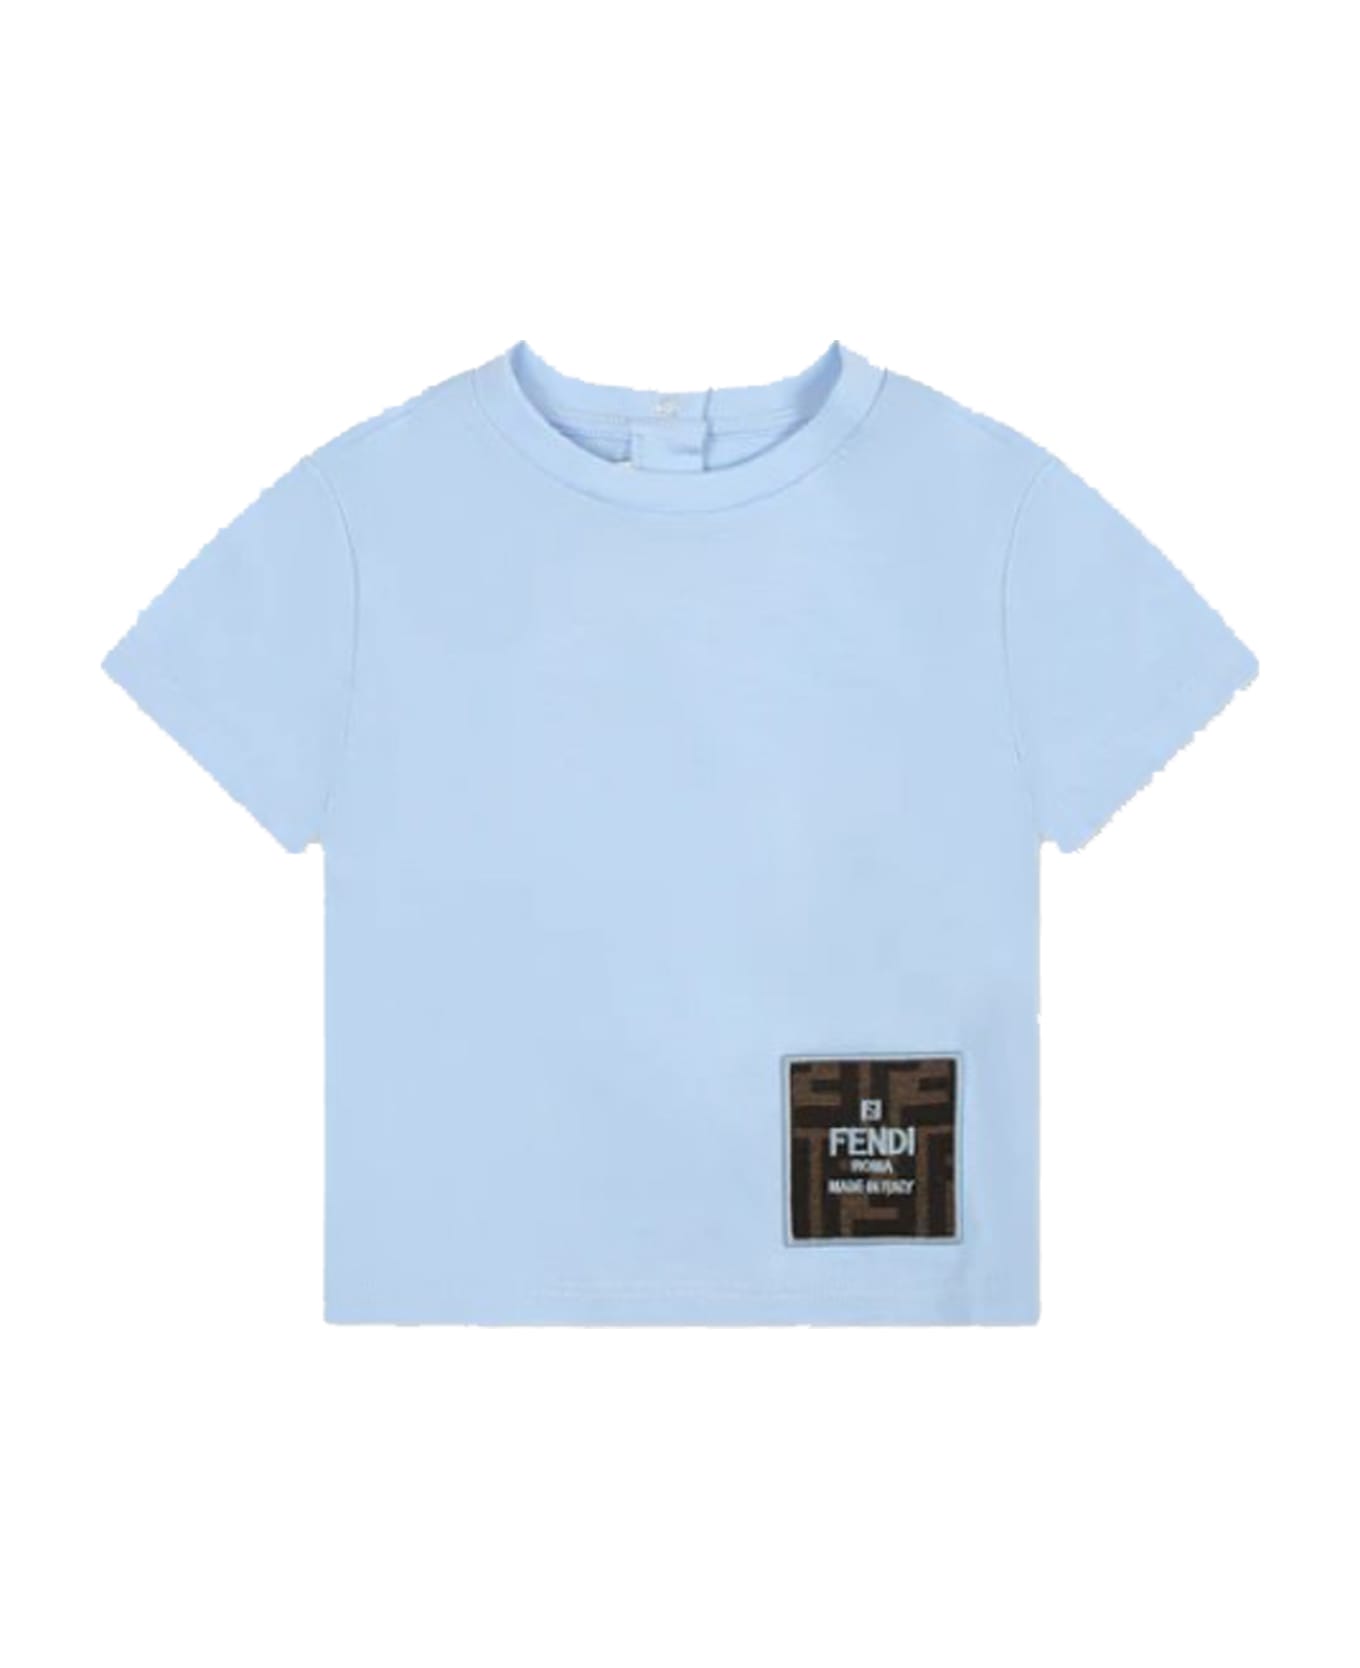 Fendi Baby T-shirt - Light blue